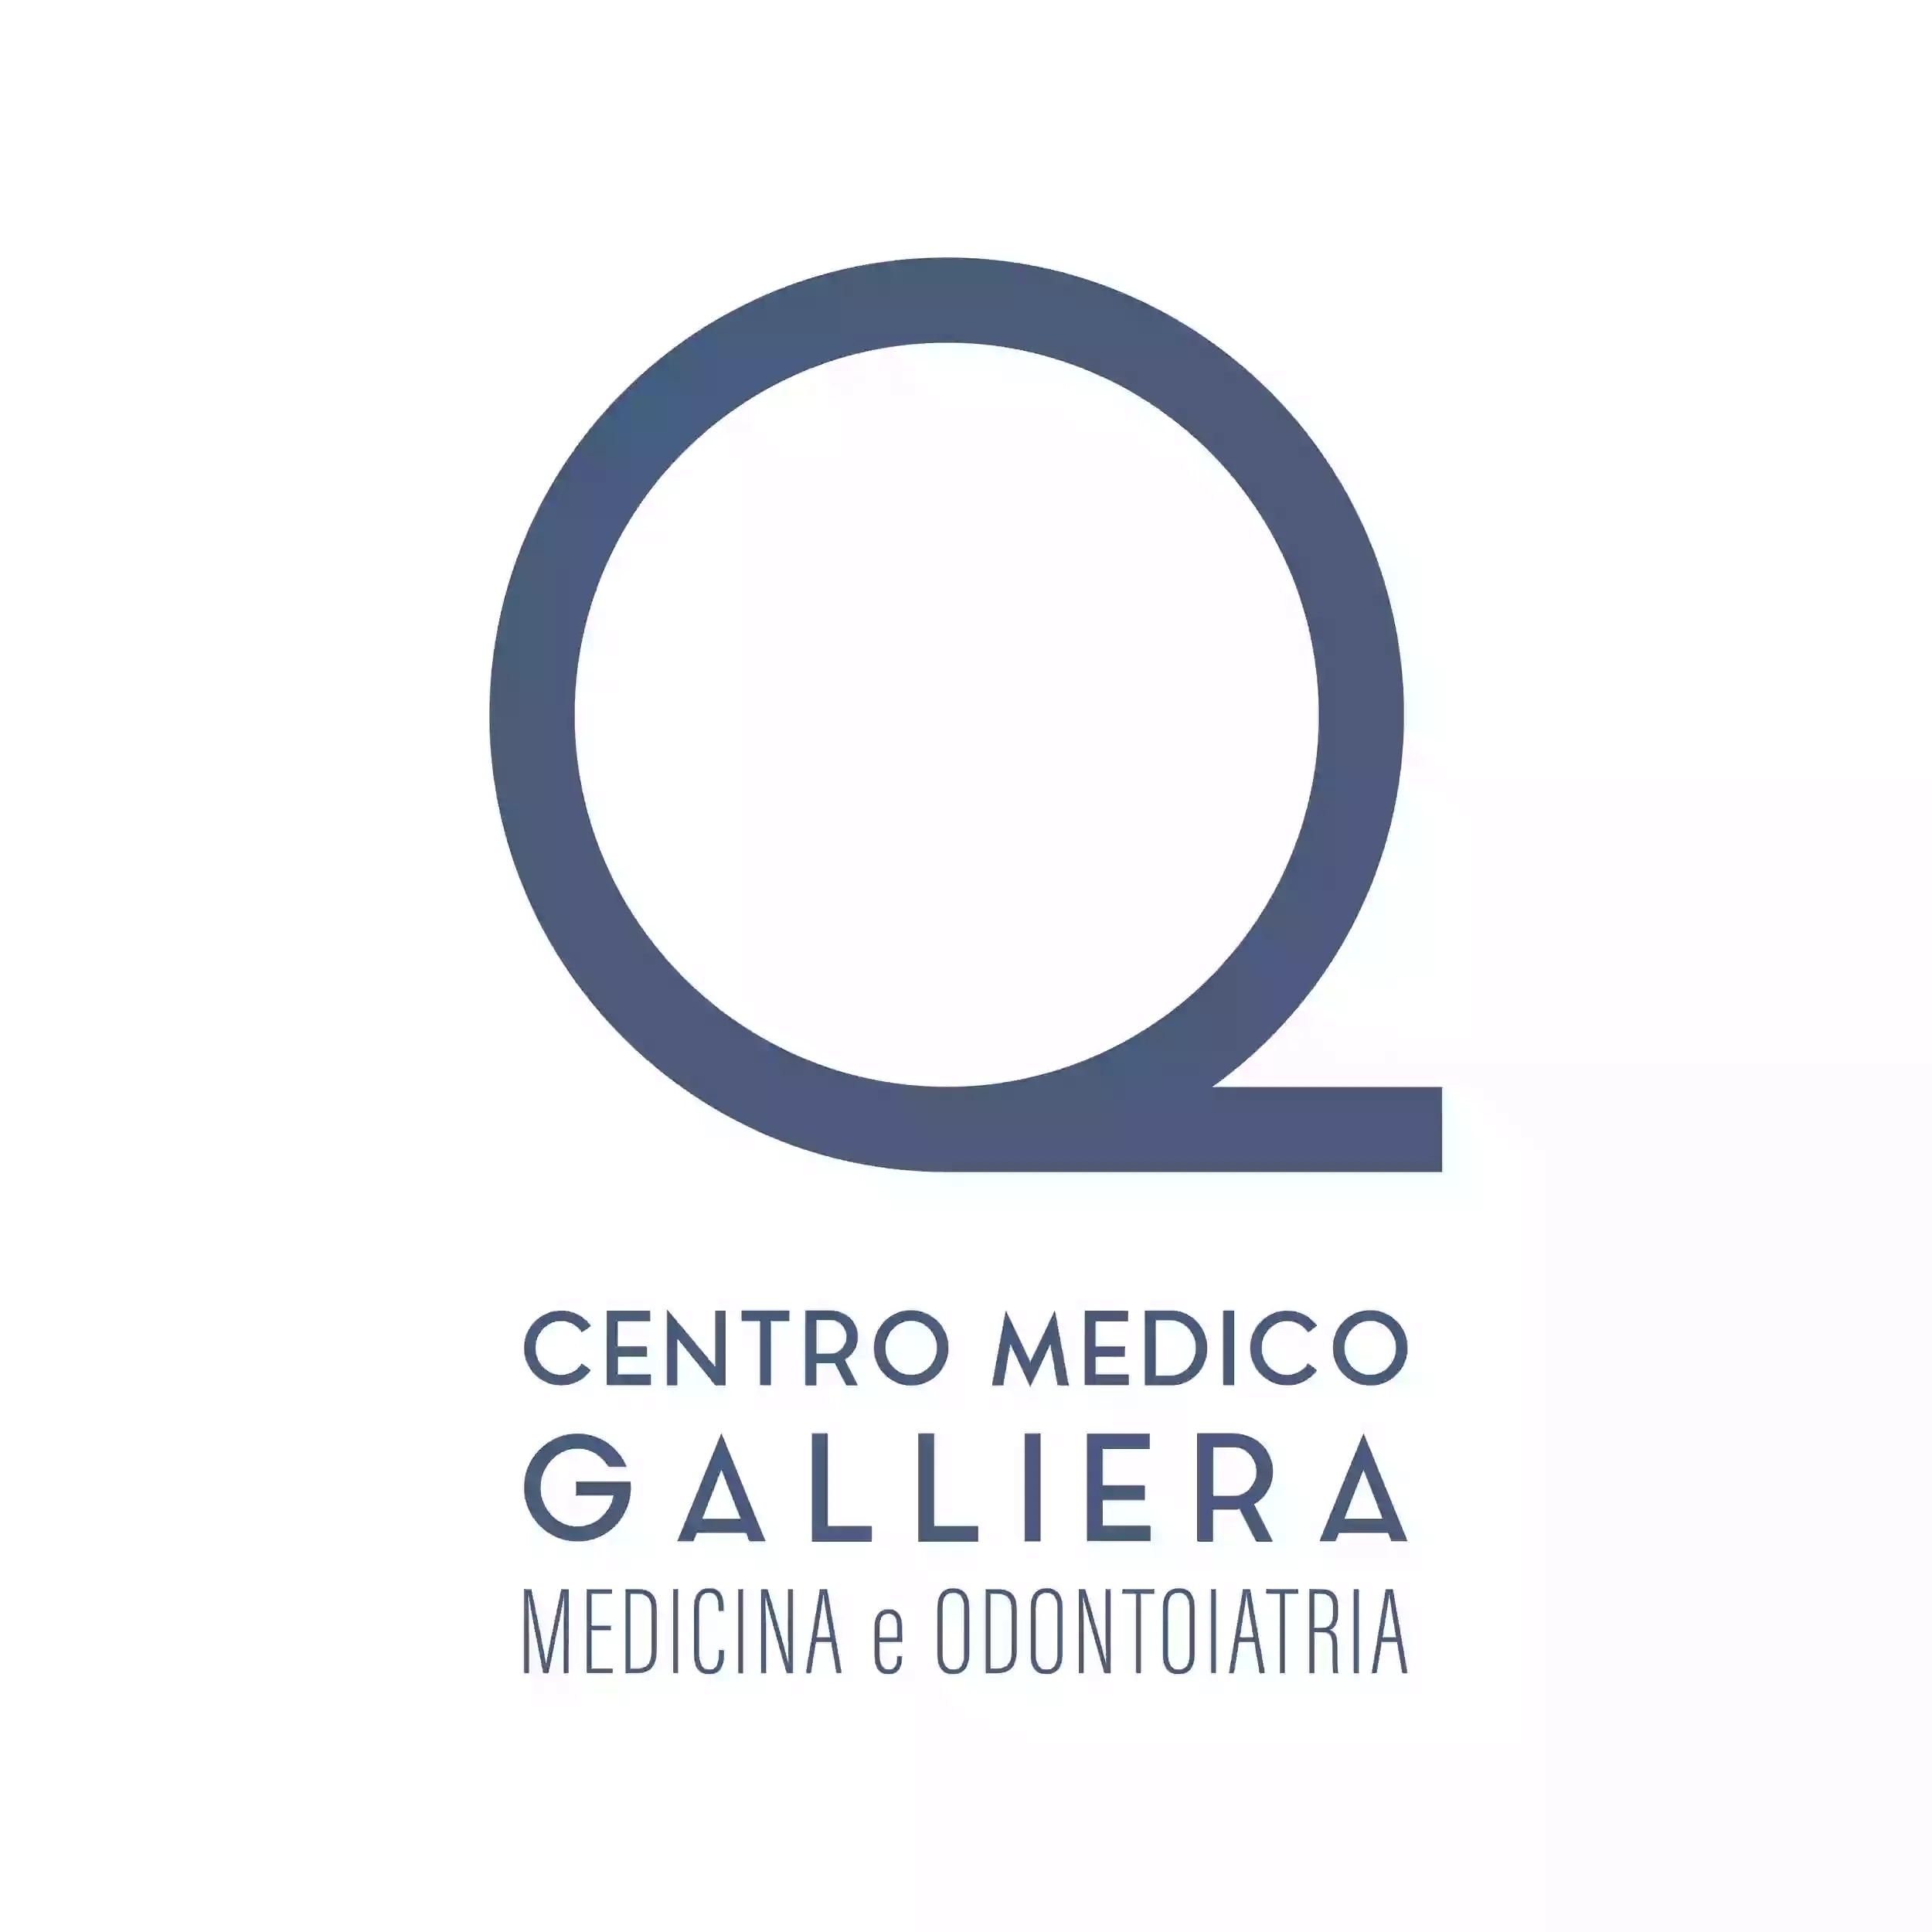 Centro Medico Galliera